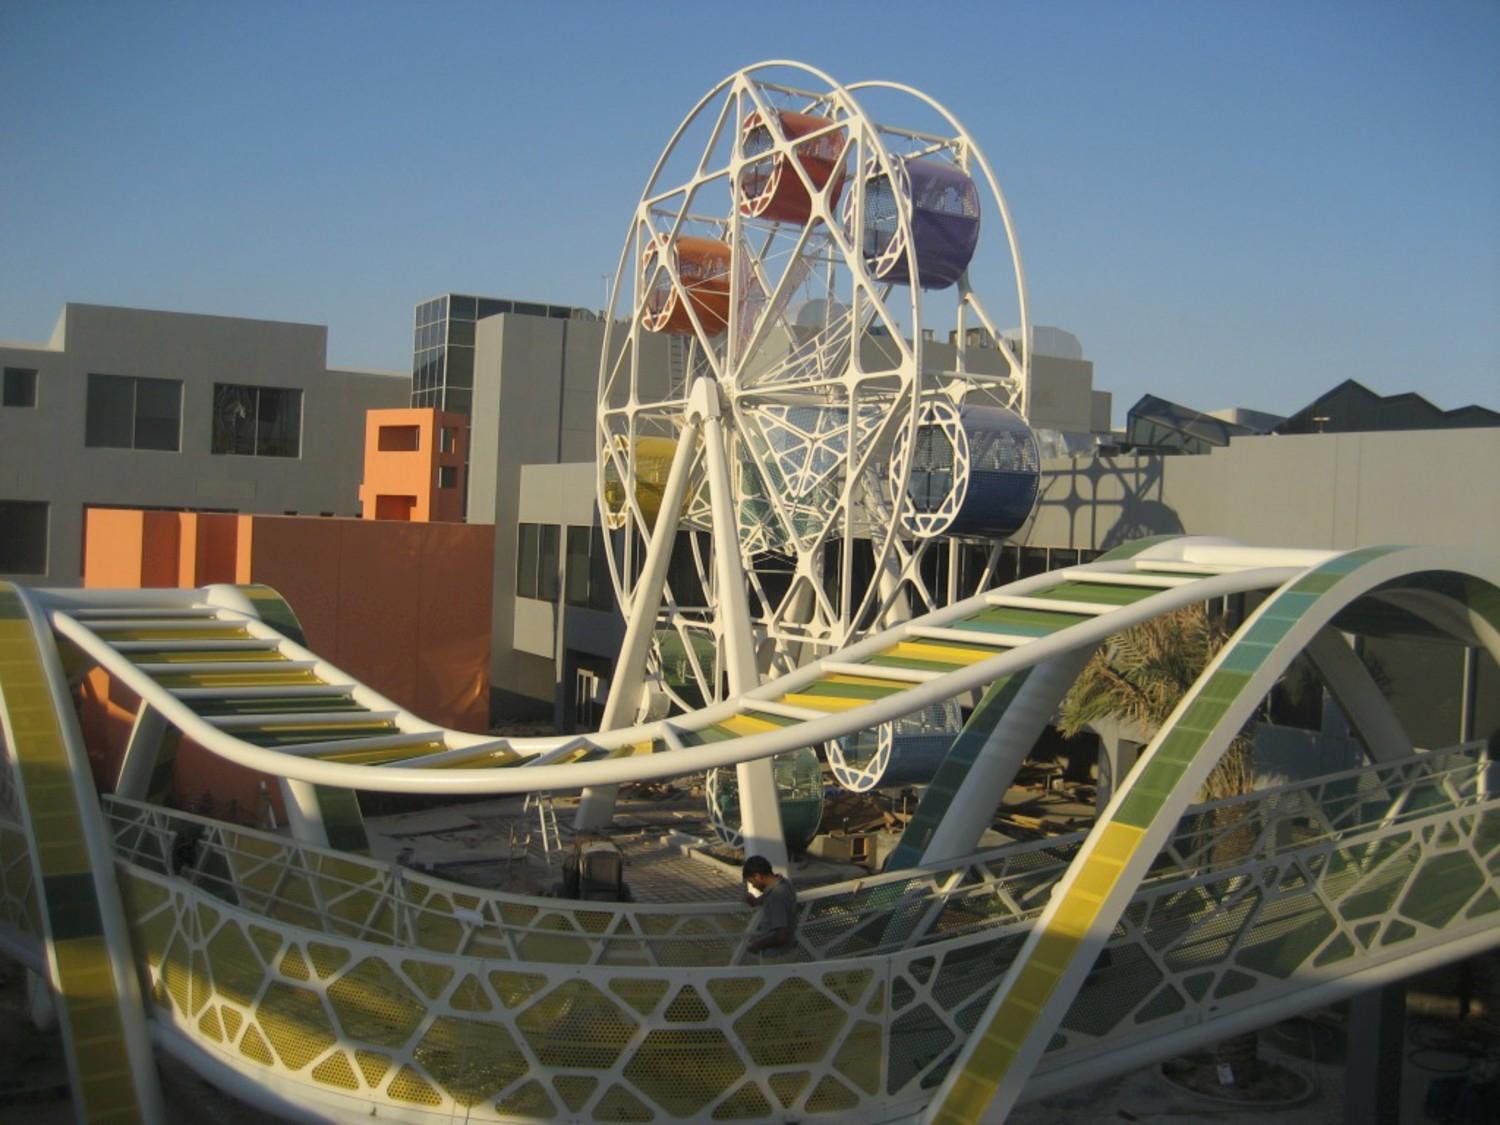 Bayt Abdullah Walkways and Ferris Wheel